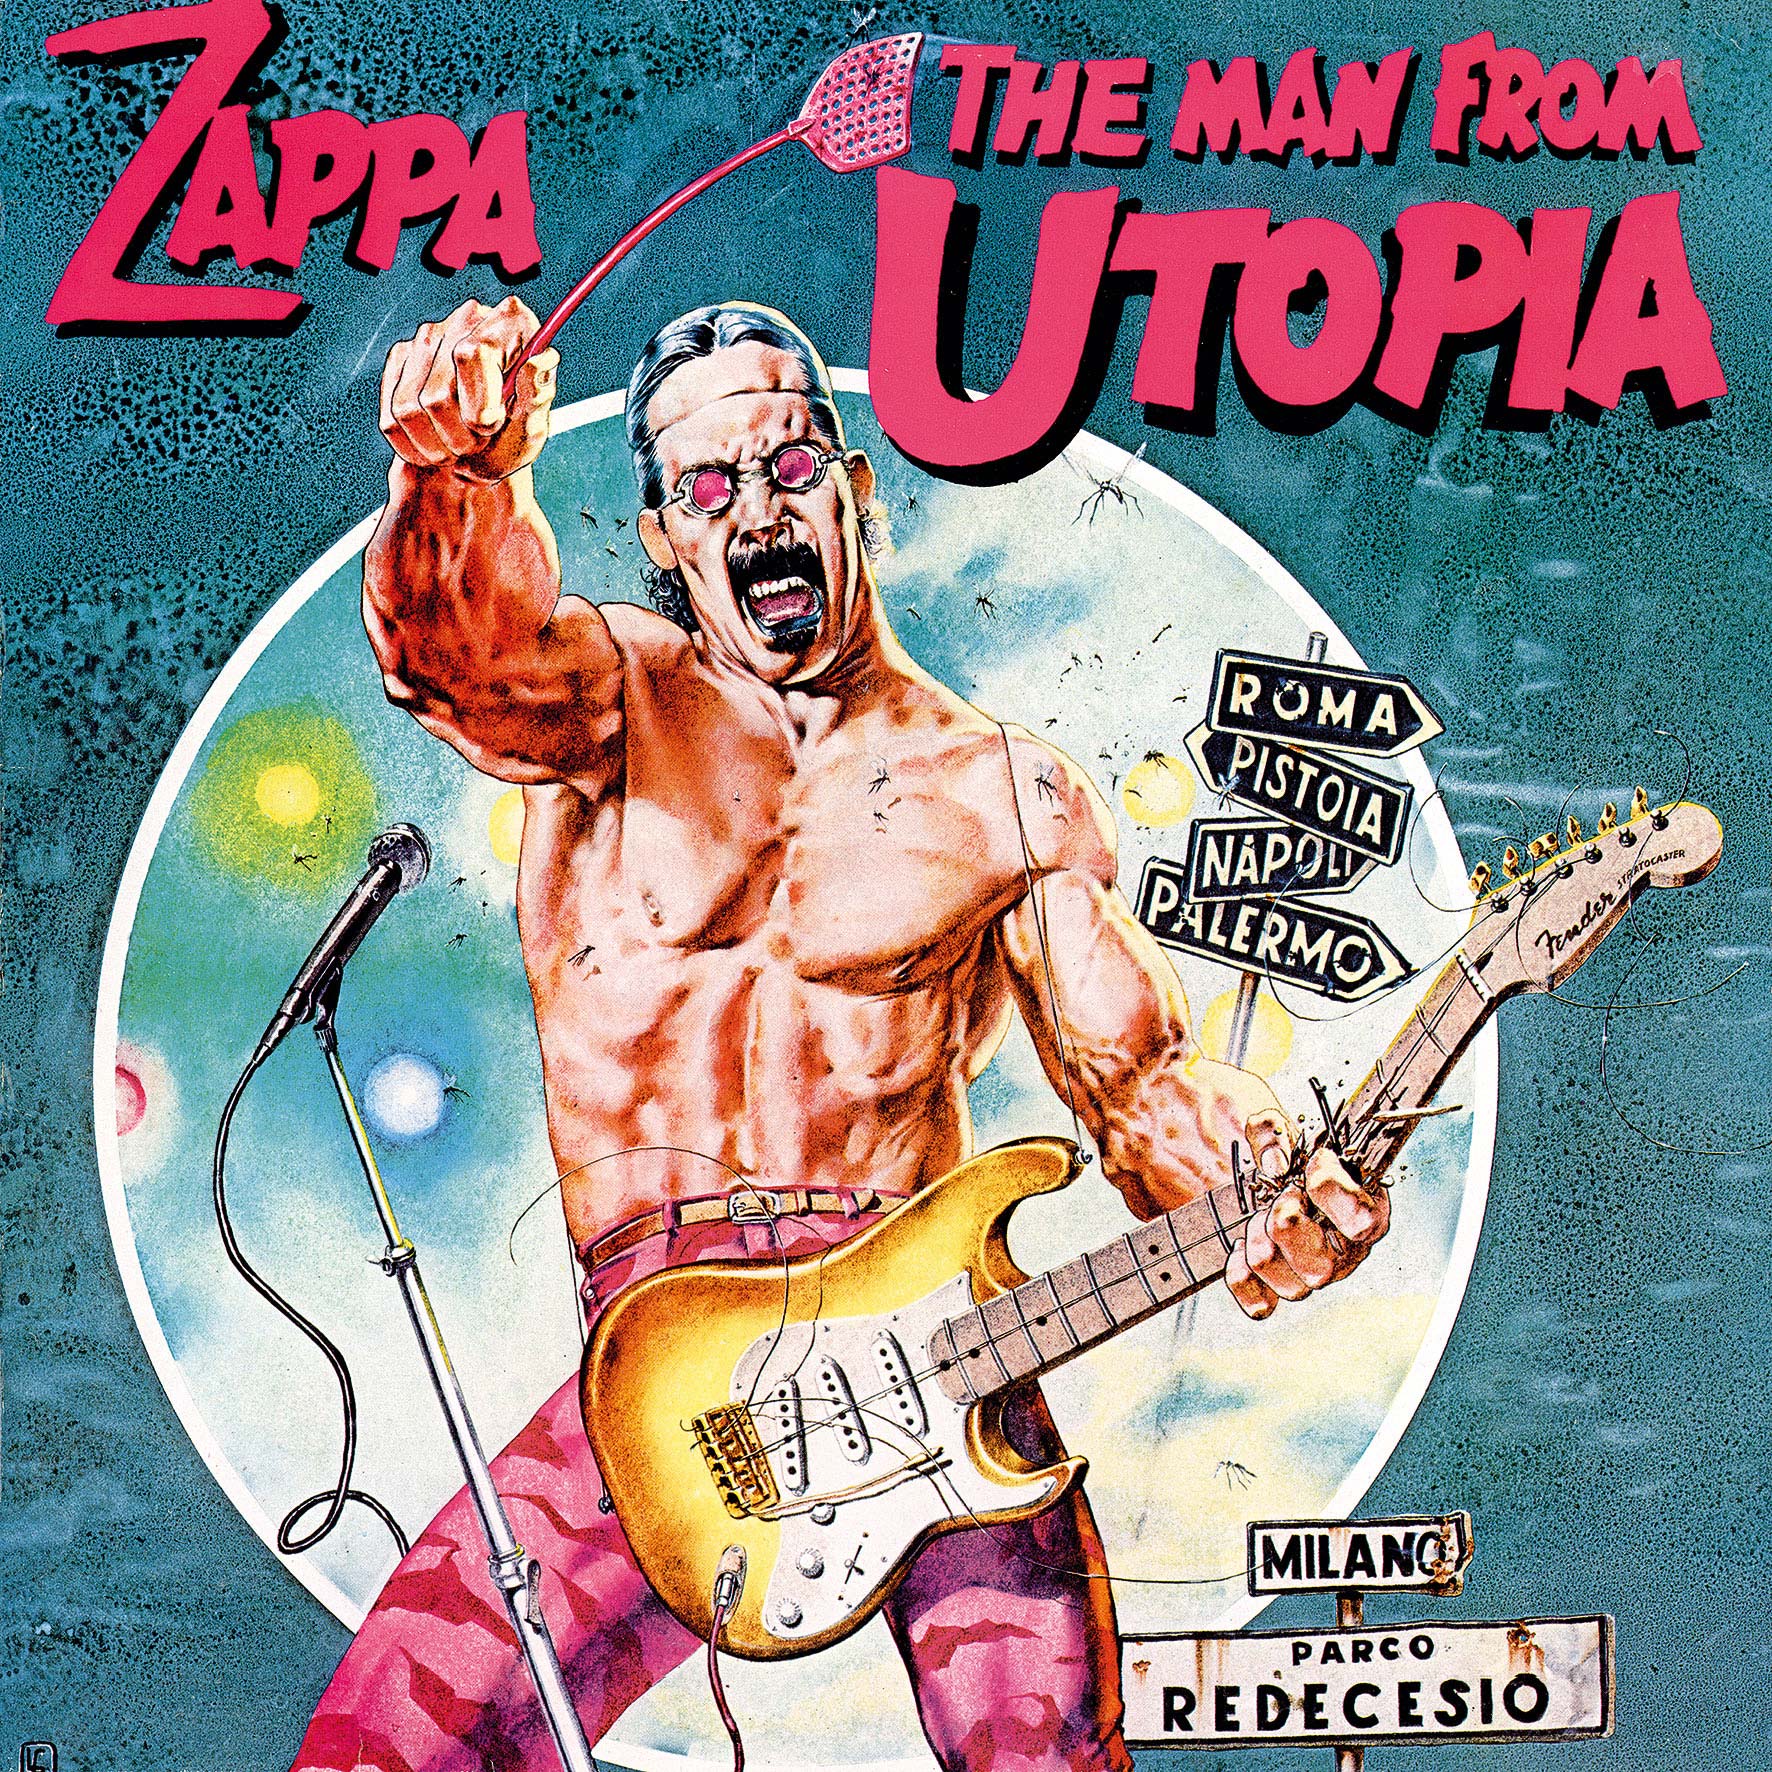 VINYL! Die Comic-Cover© 1983 Tanino Liberat ore, CBS (Frank Zappa: The Man f rom Utopia)